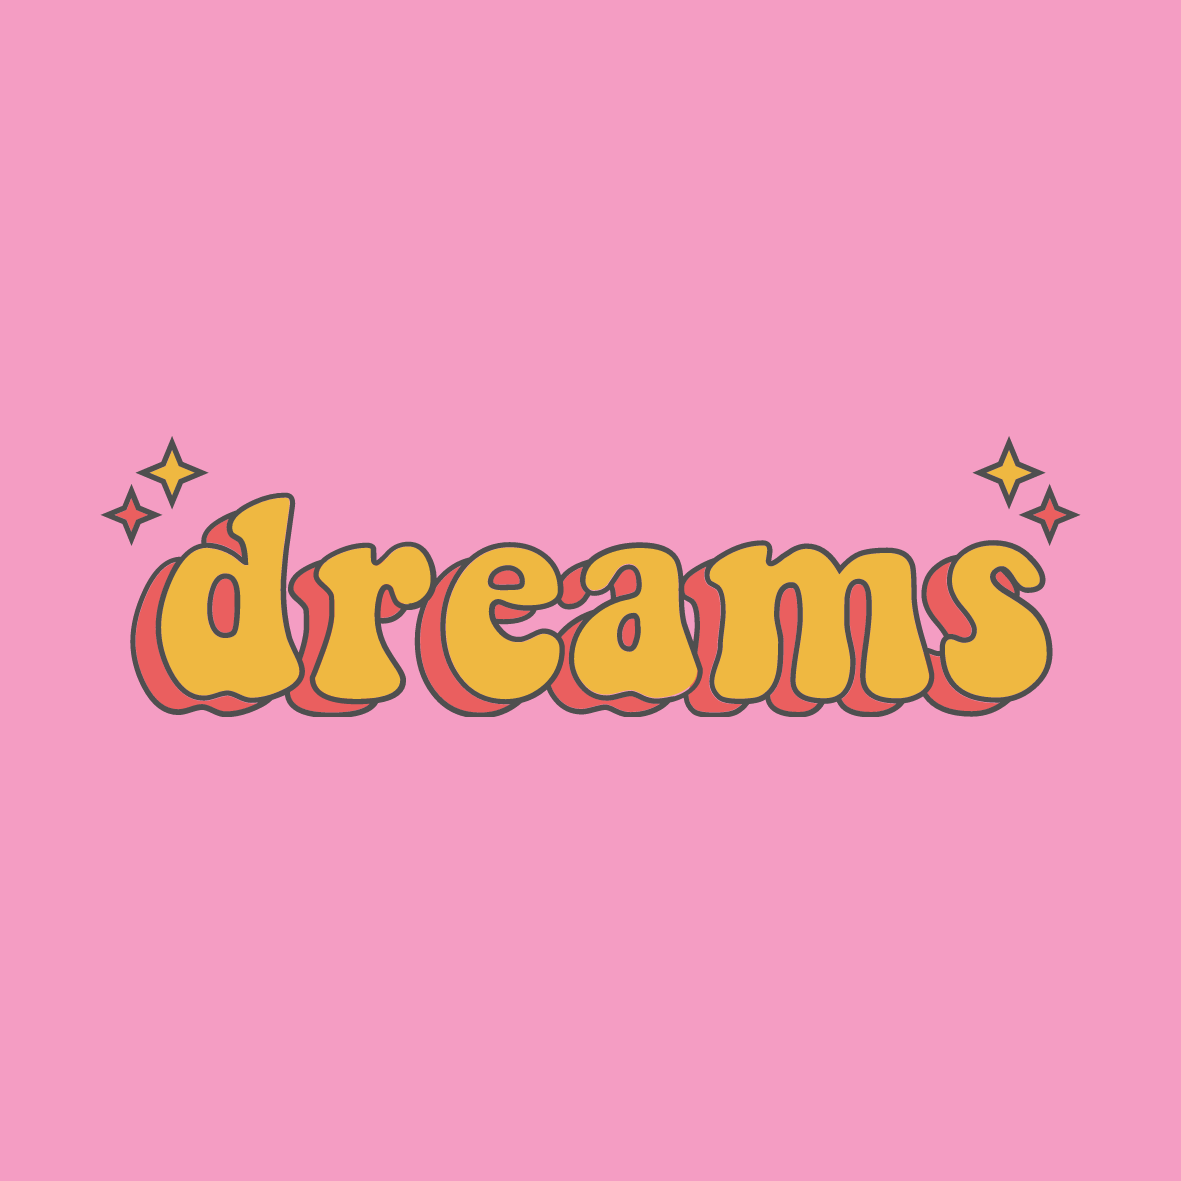 Dreams sticker